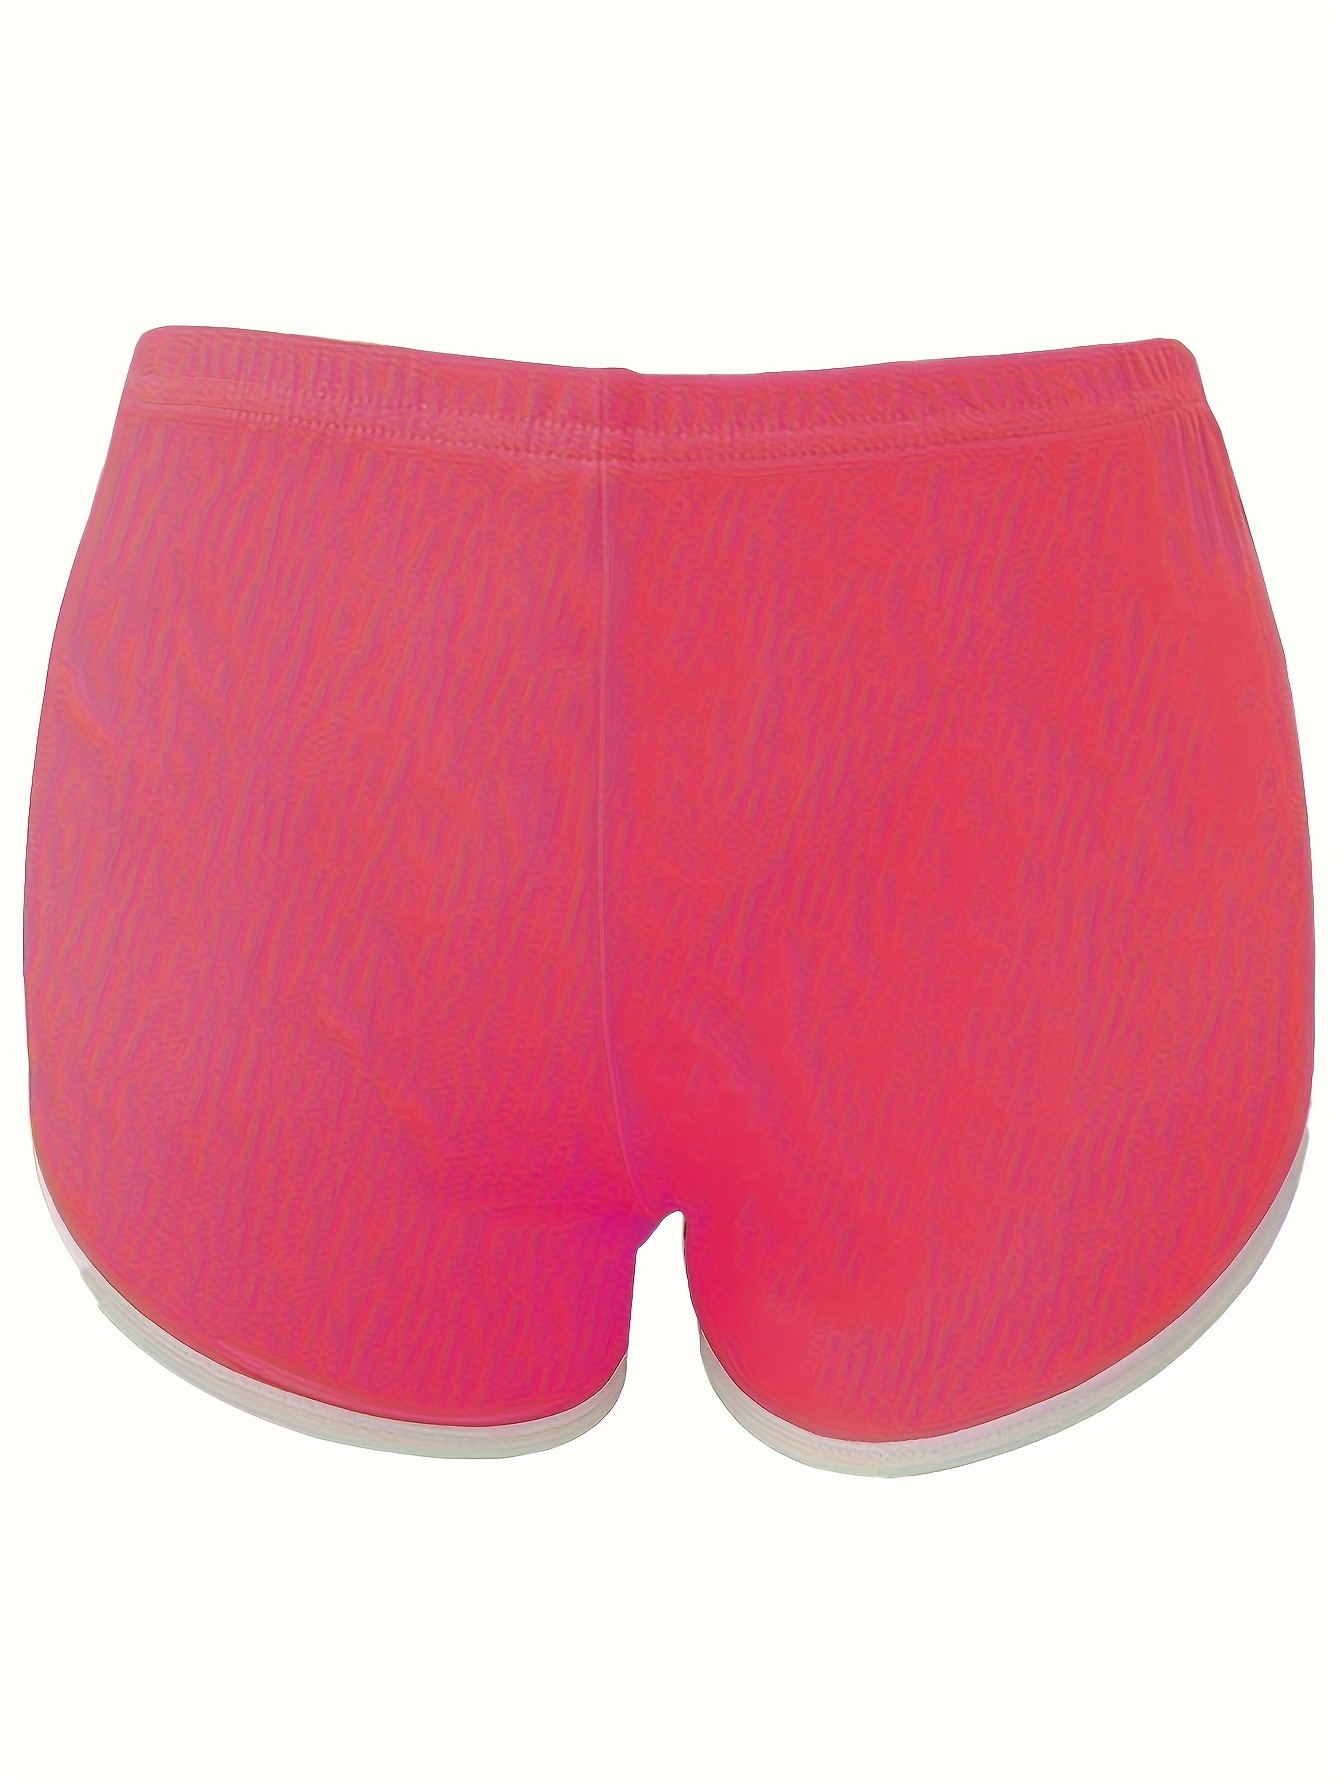 Yoga shorts for women Fashion Women's Irregular Ladies Casual Pants Elastic  Waist Yoga Shorts crz yoga leggings yoga mats for home workout Pink L